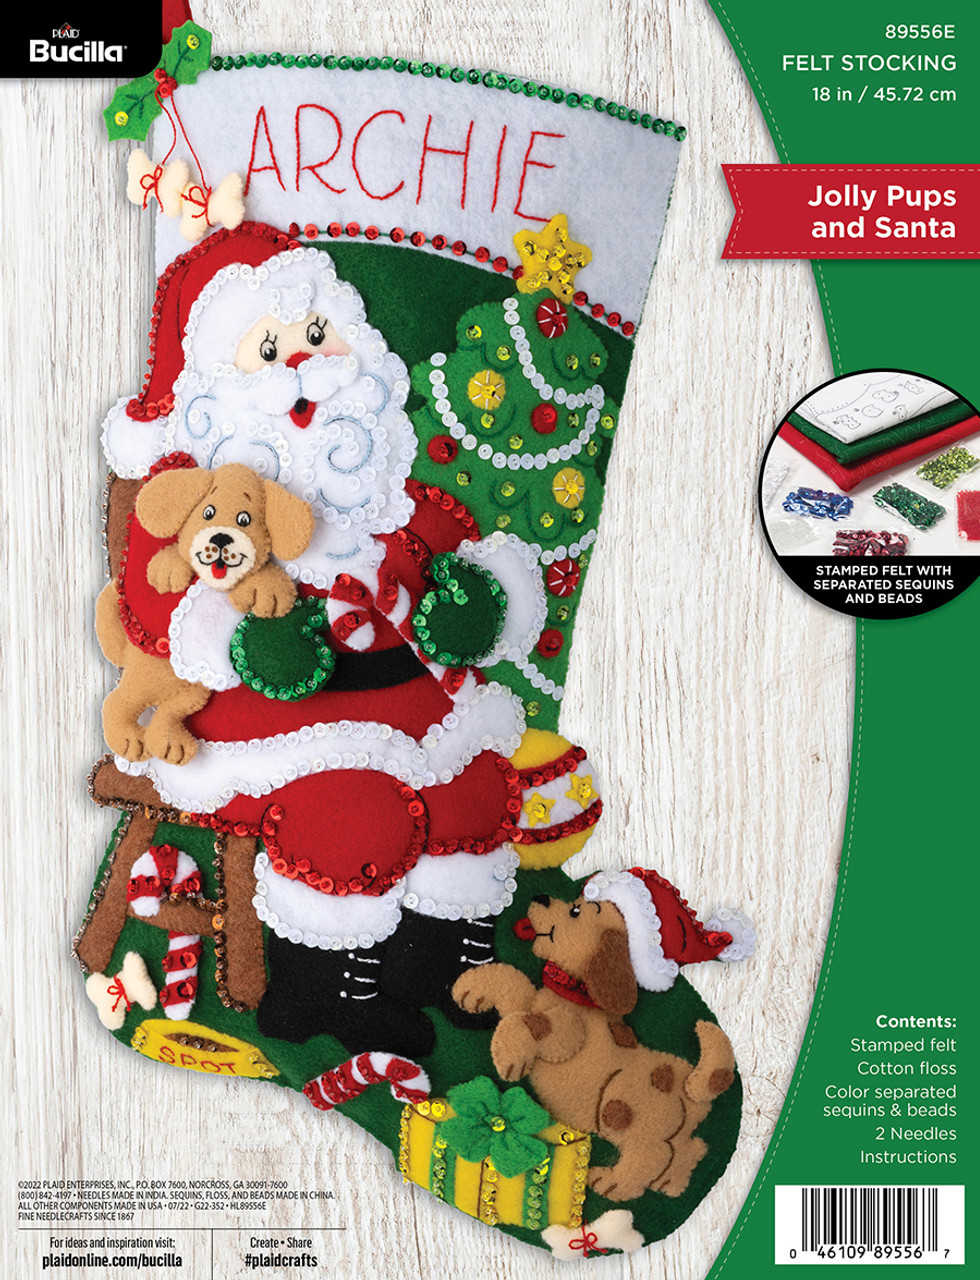 Gift Bag Felt Christmas Ornaments Kit - Felt Applique Crafts at